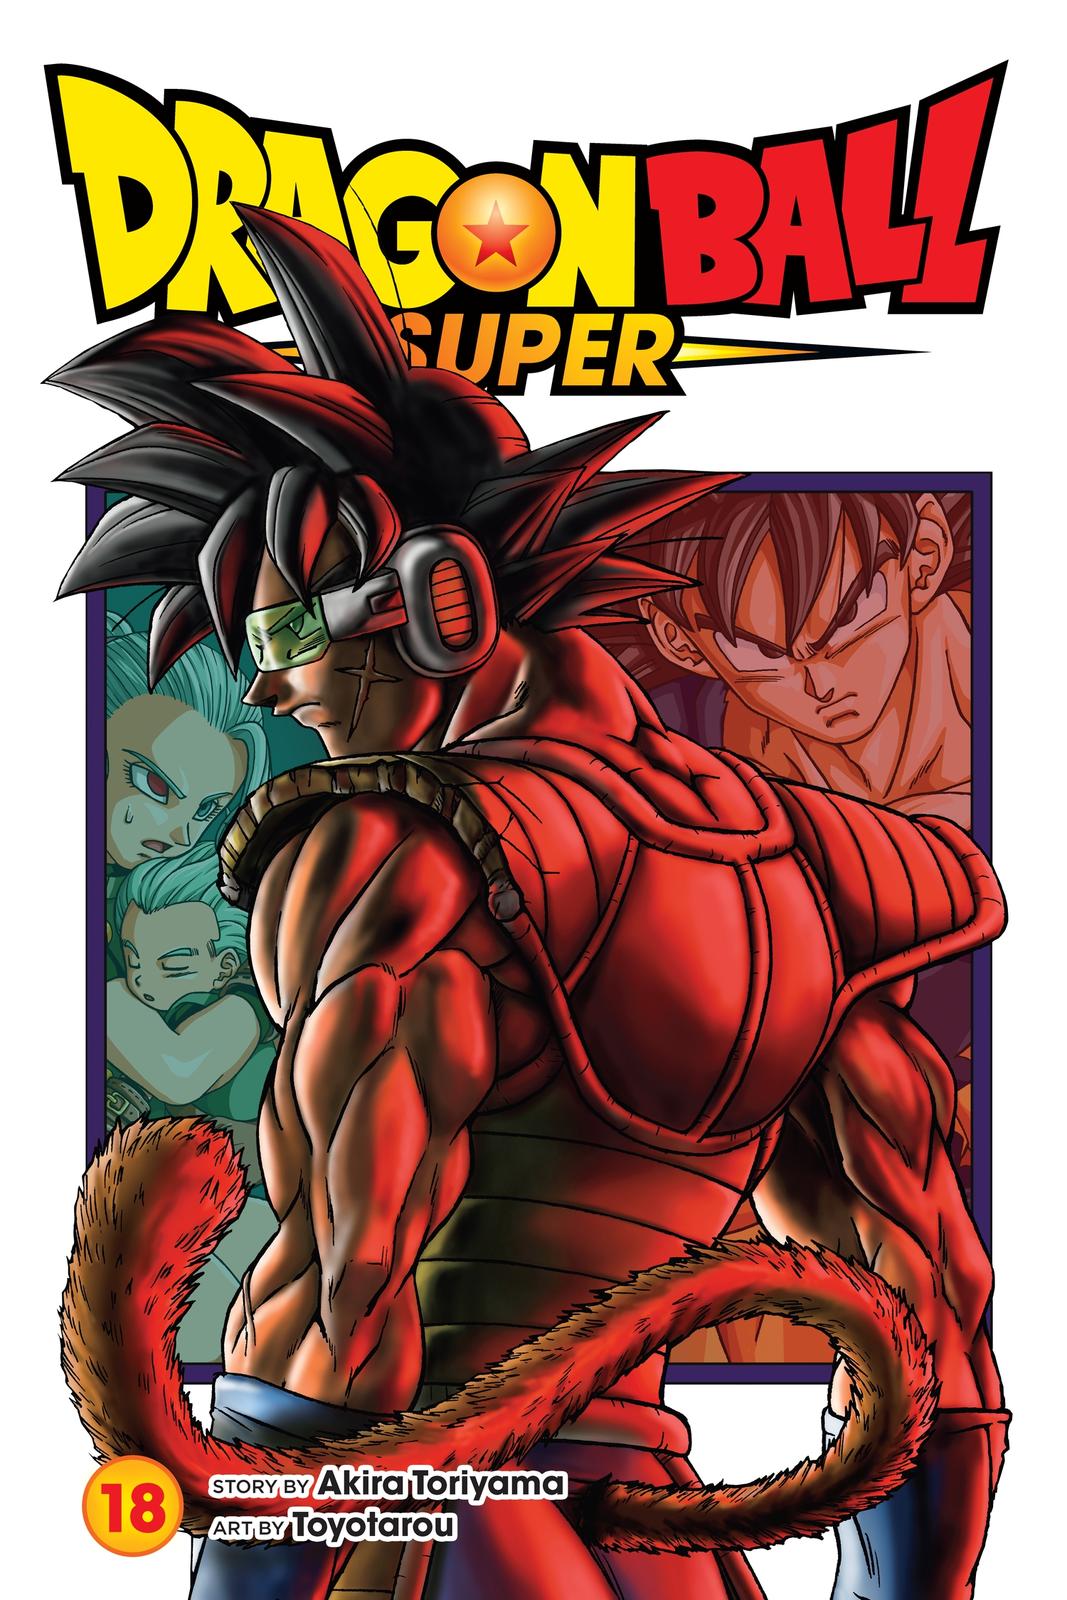 Dragon Ball Super Manga 89 COMPLETO, Traduzido Br